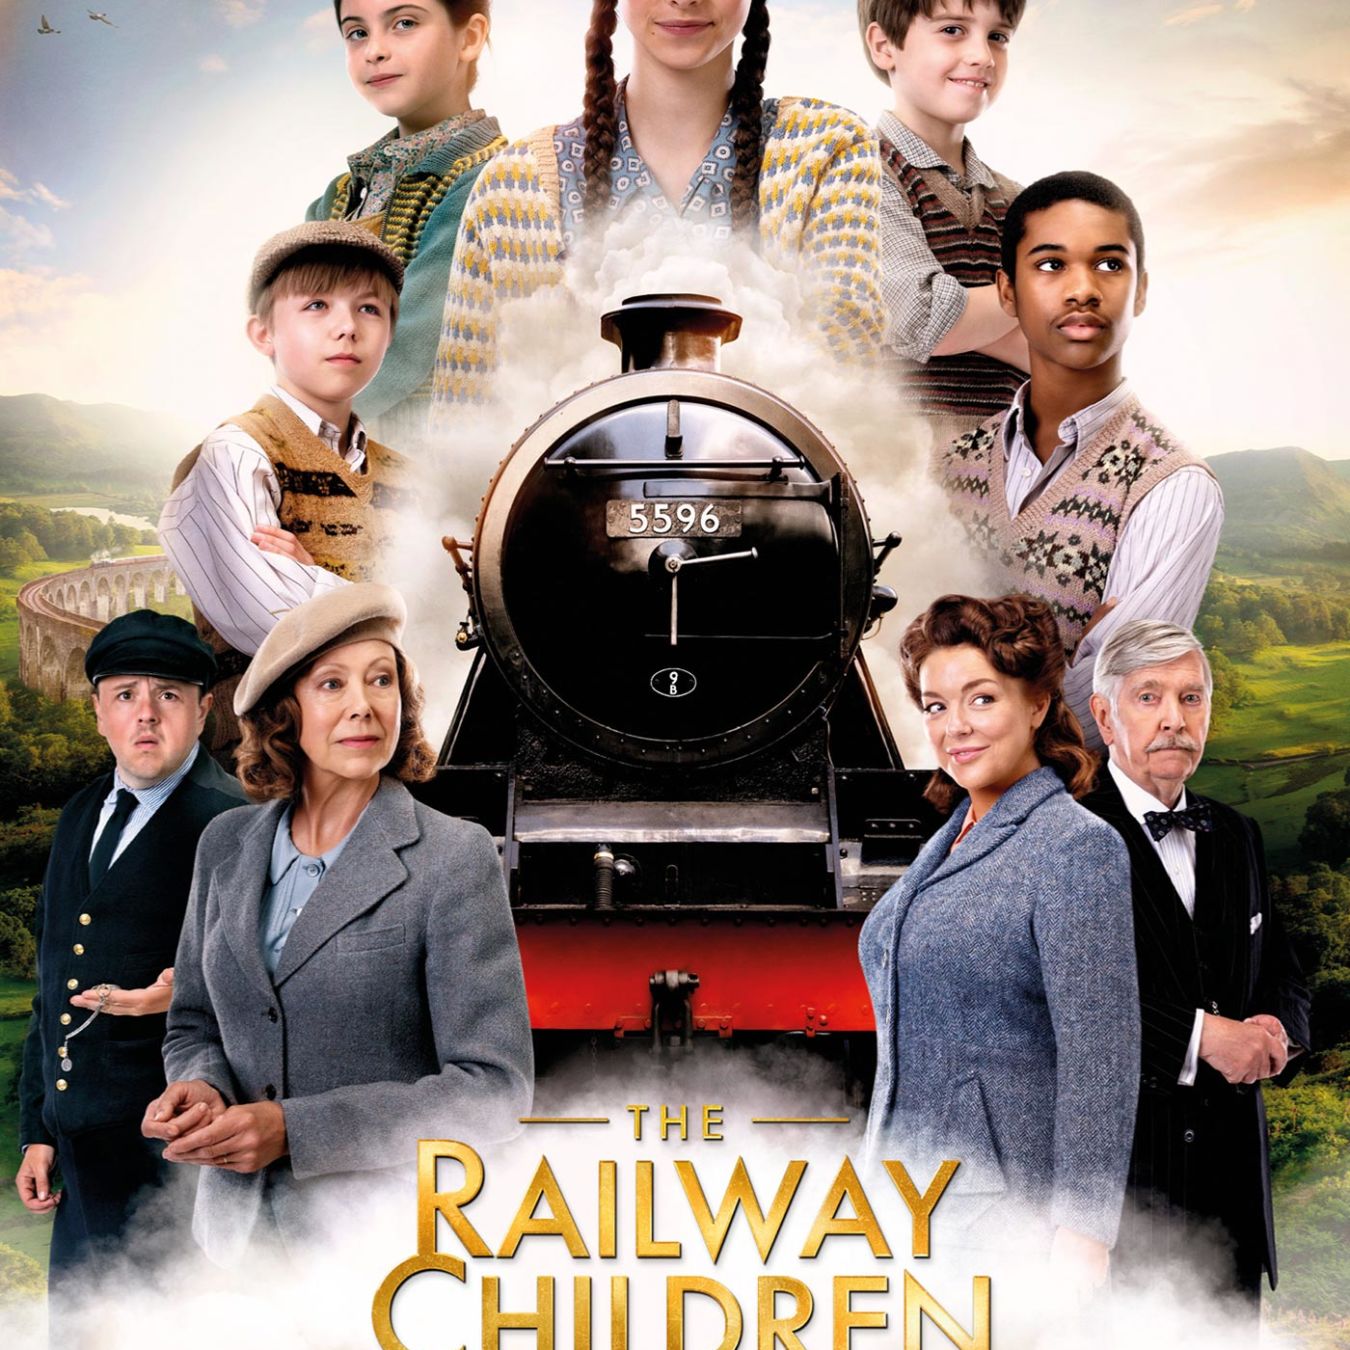 Publicity poster for The Railway Children: Return